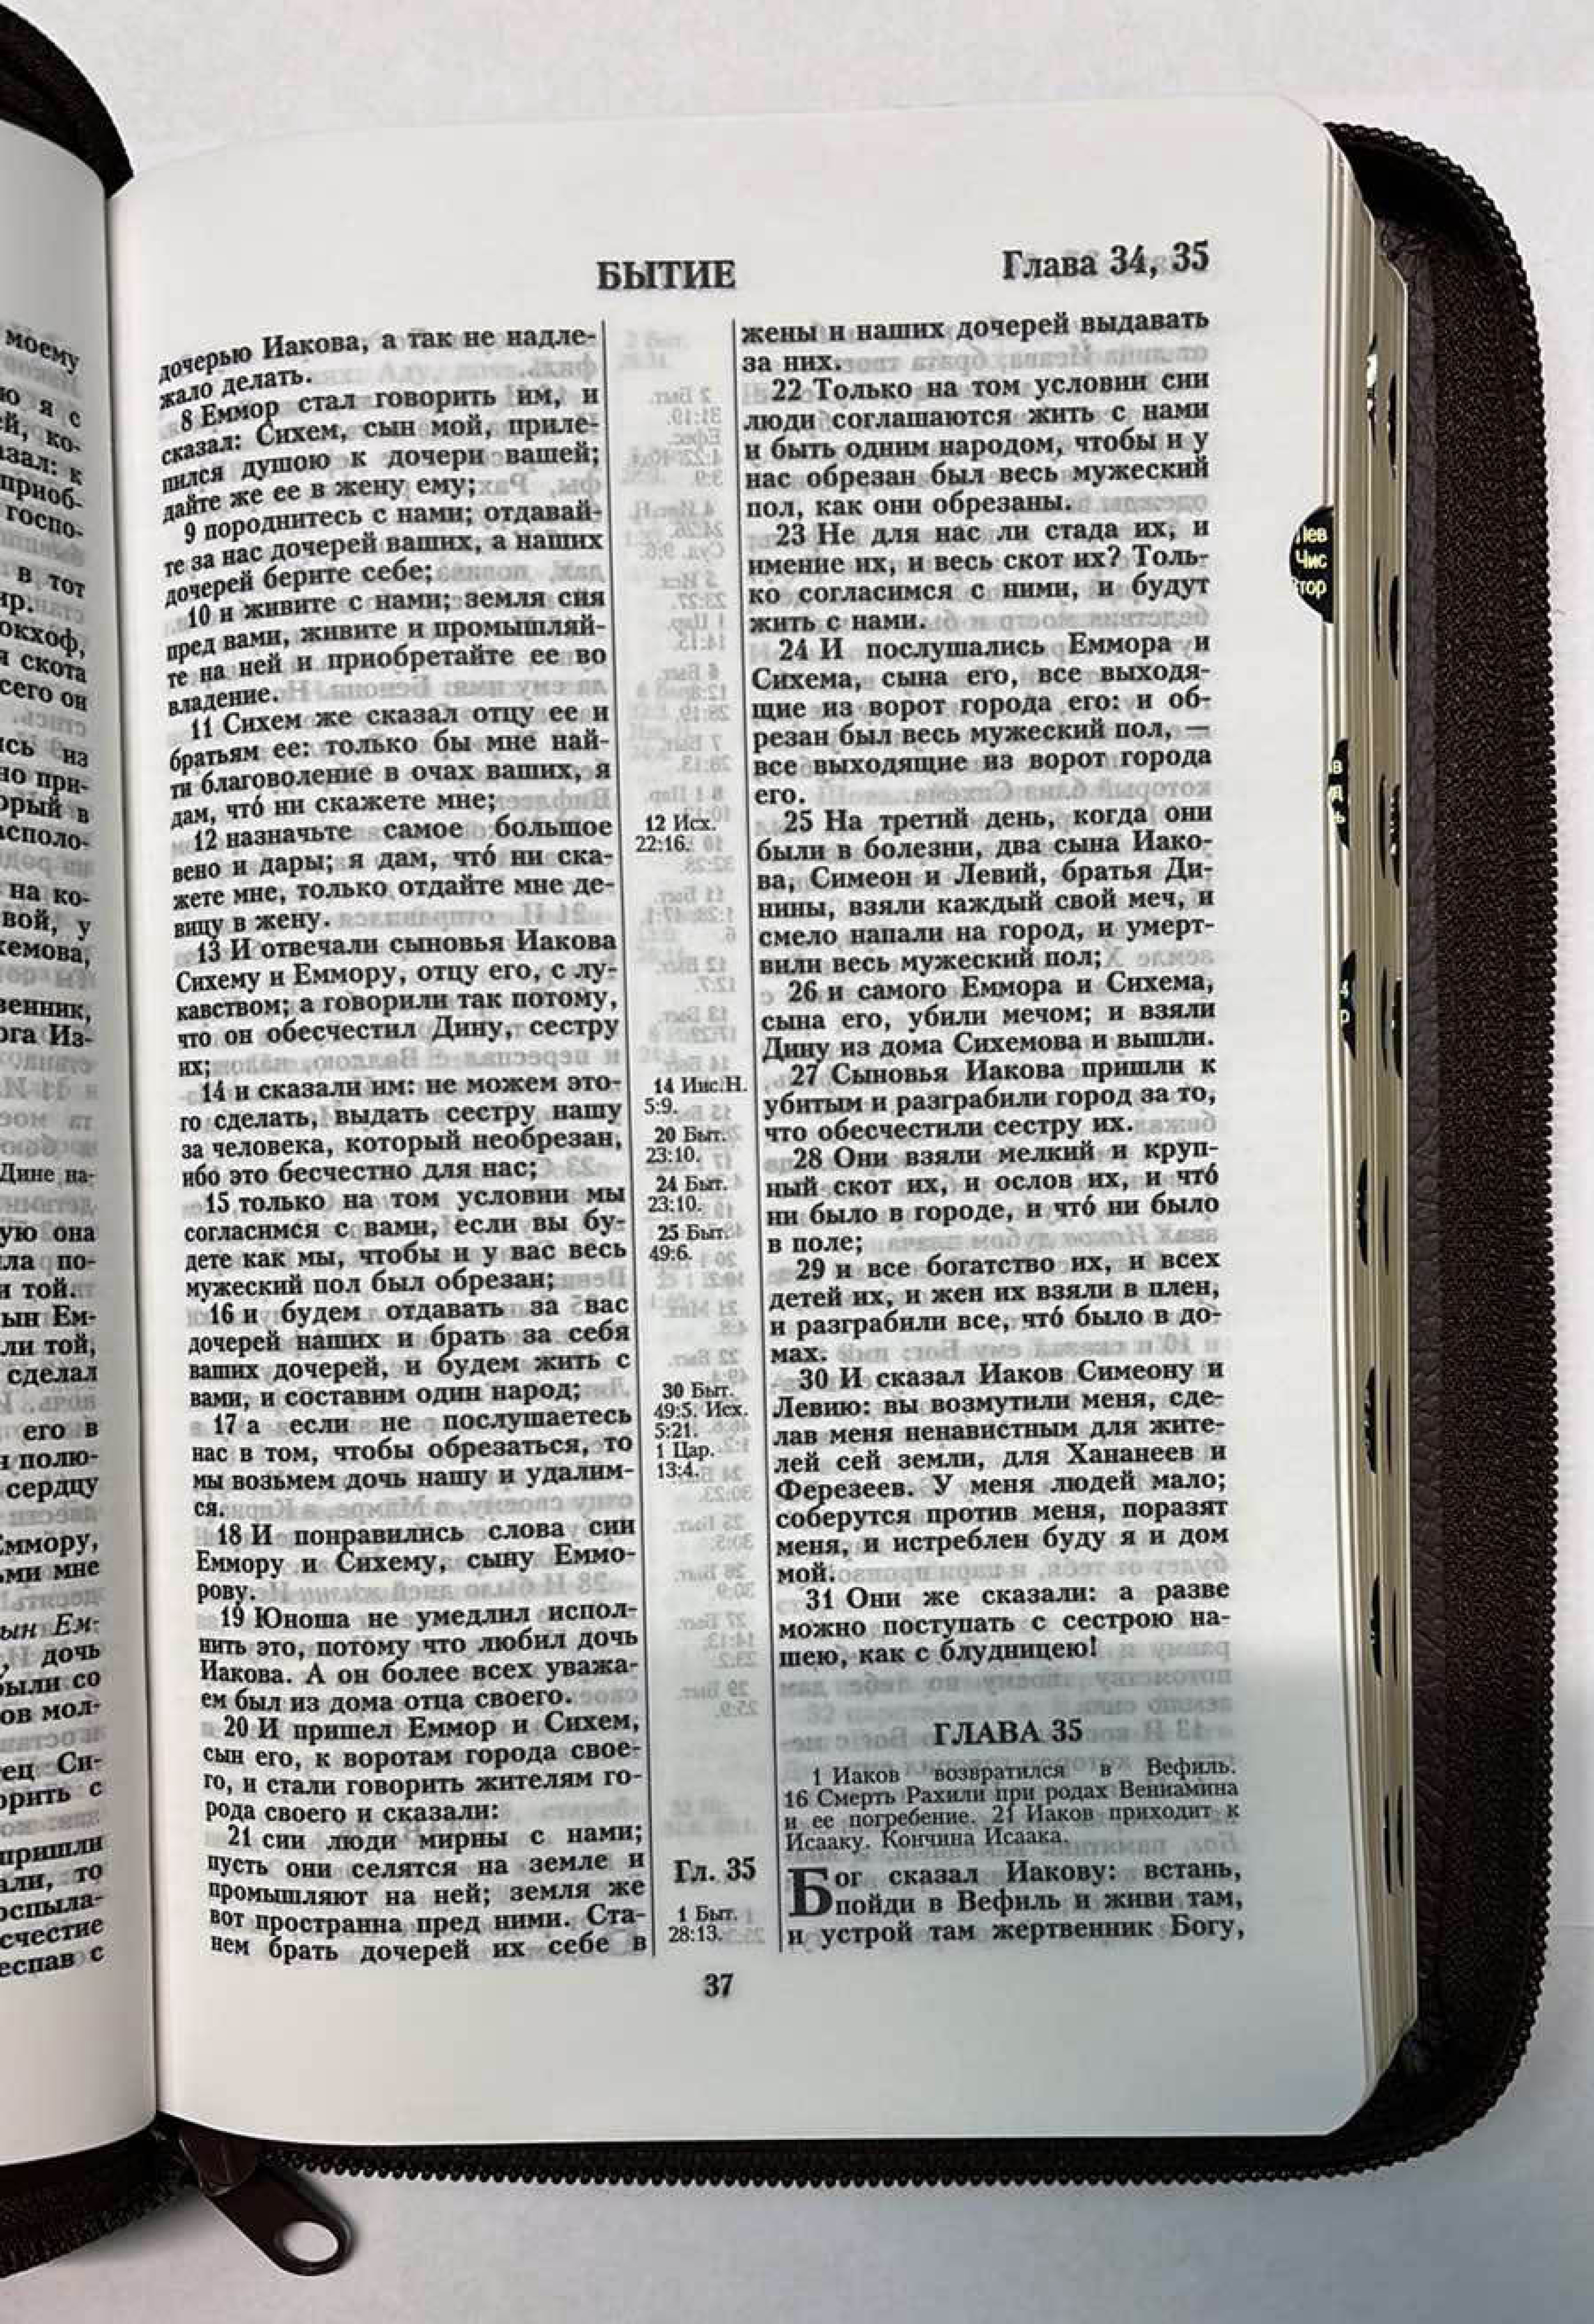 Библия 056 Zti, р/к  (7697)